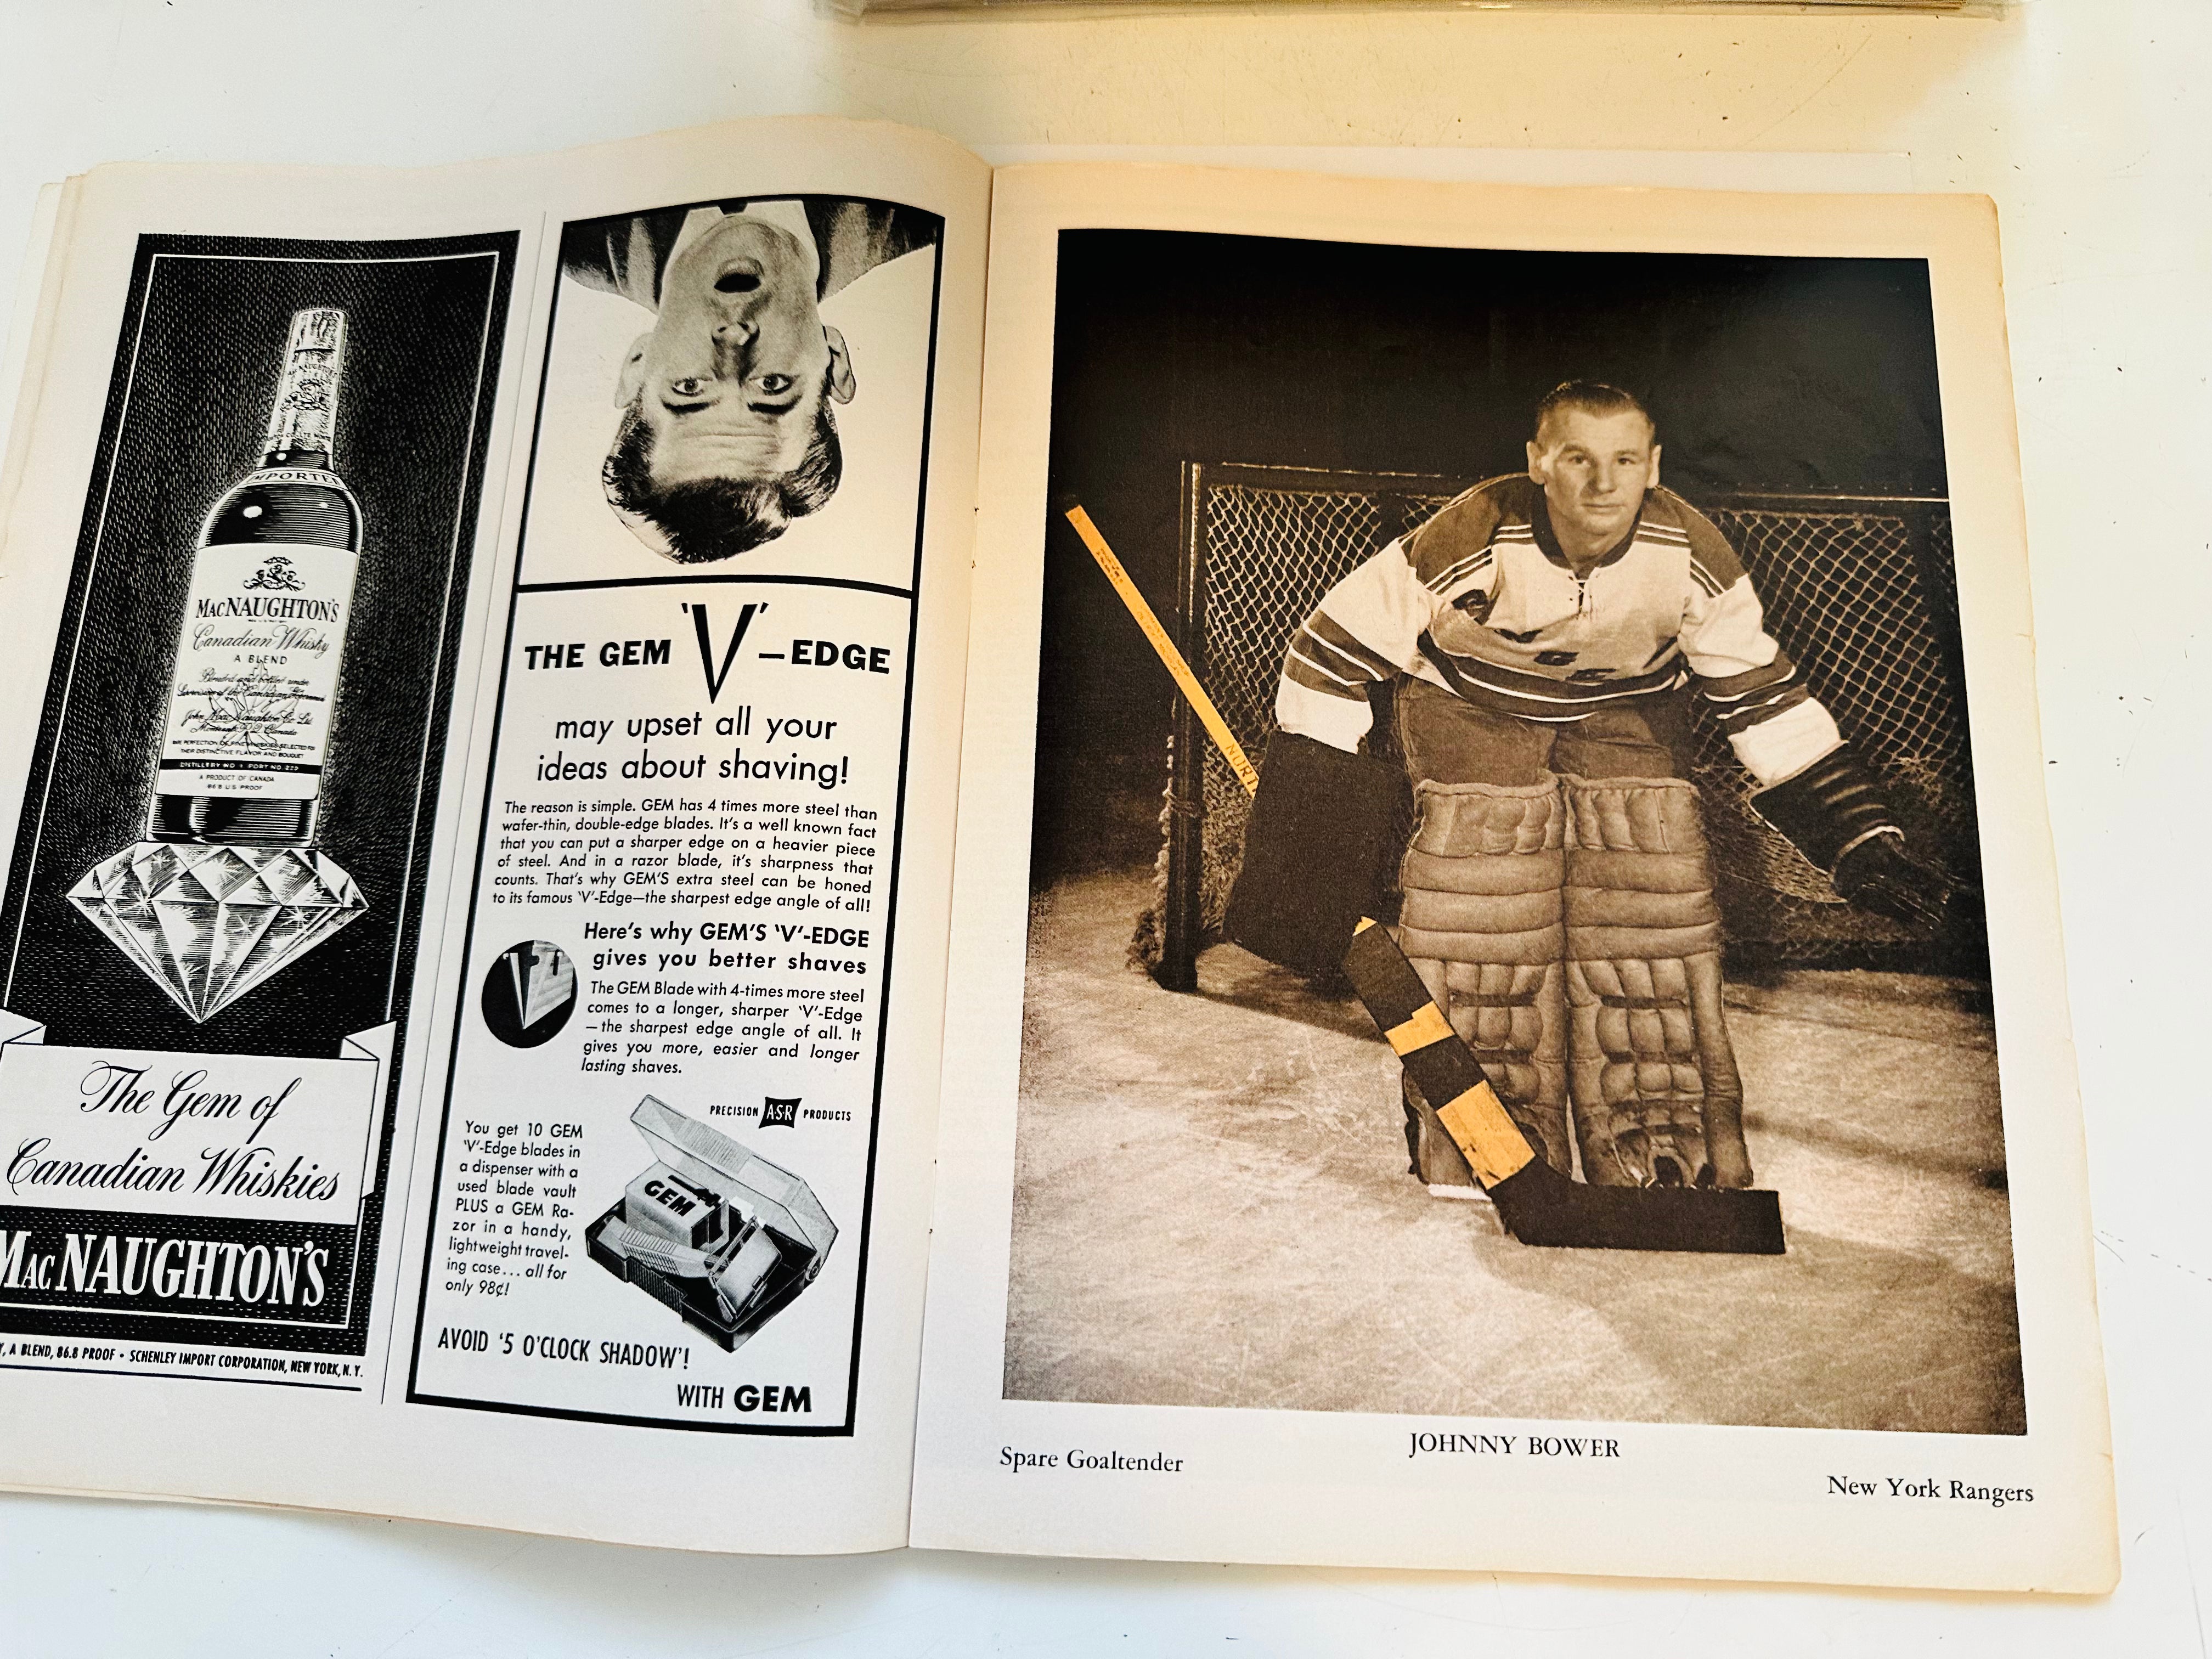 1954-55 Leafs Vs Rangers rare hockey game program Dec.12